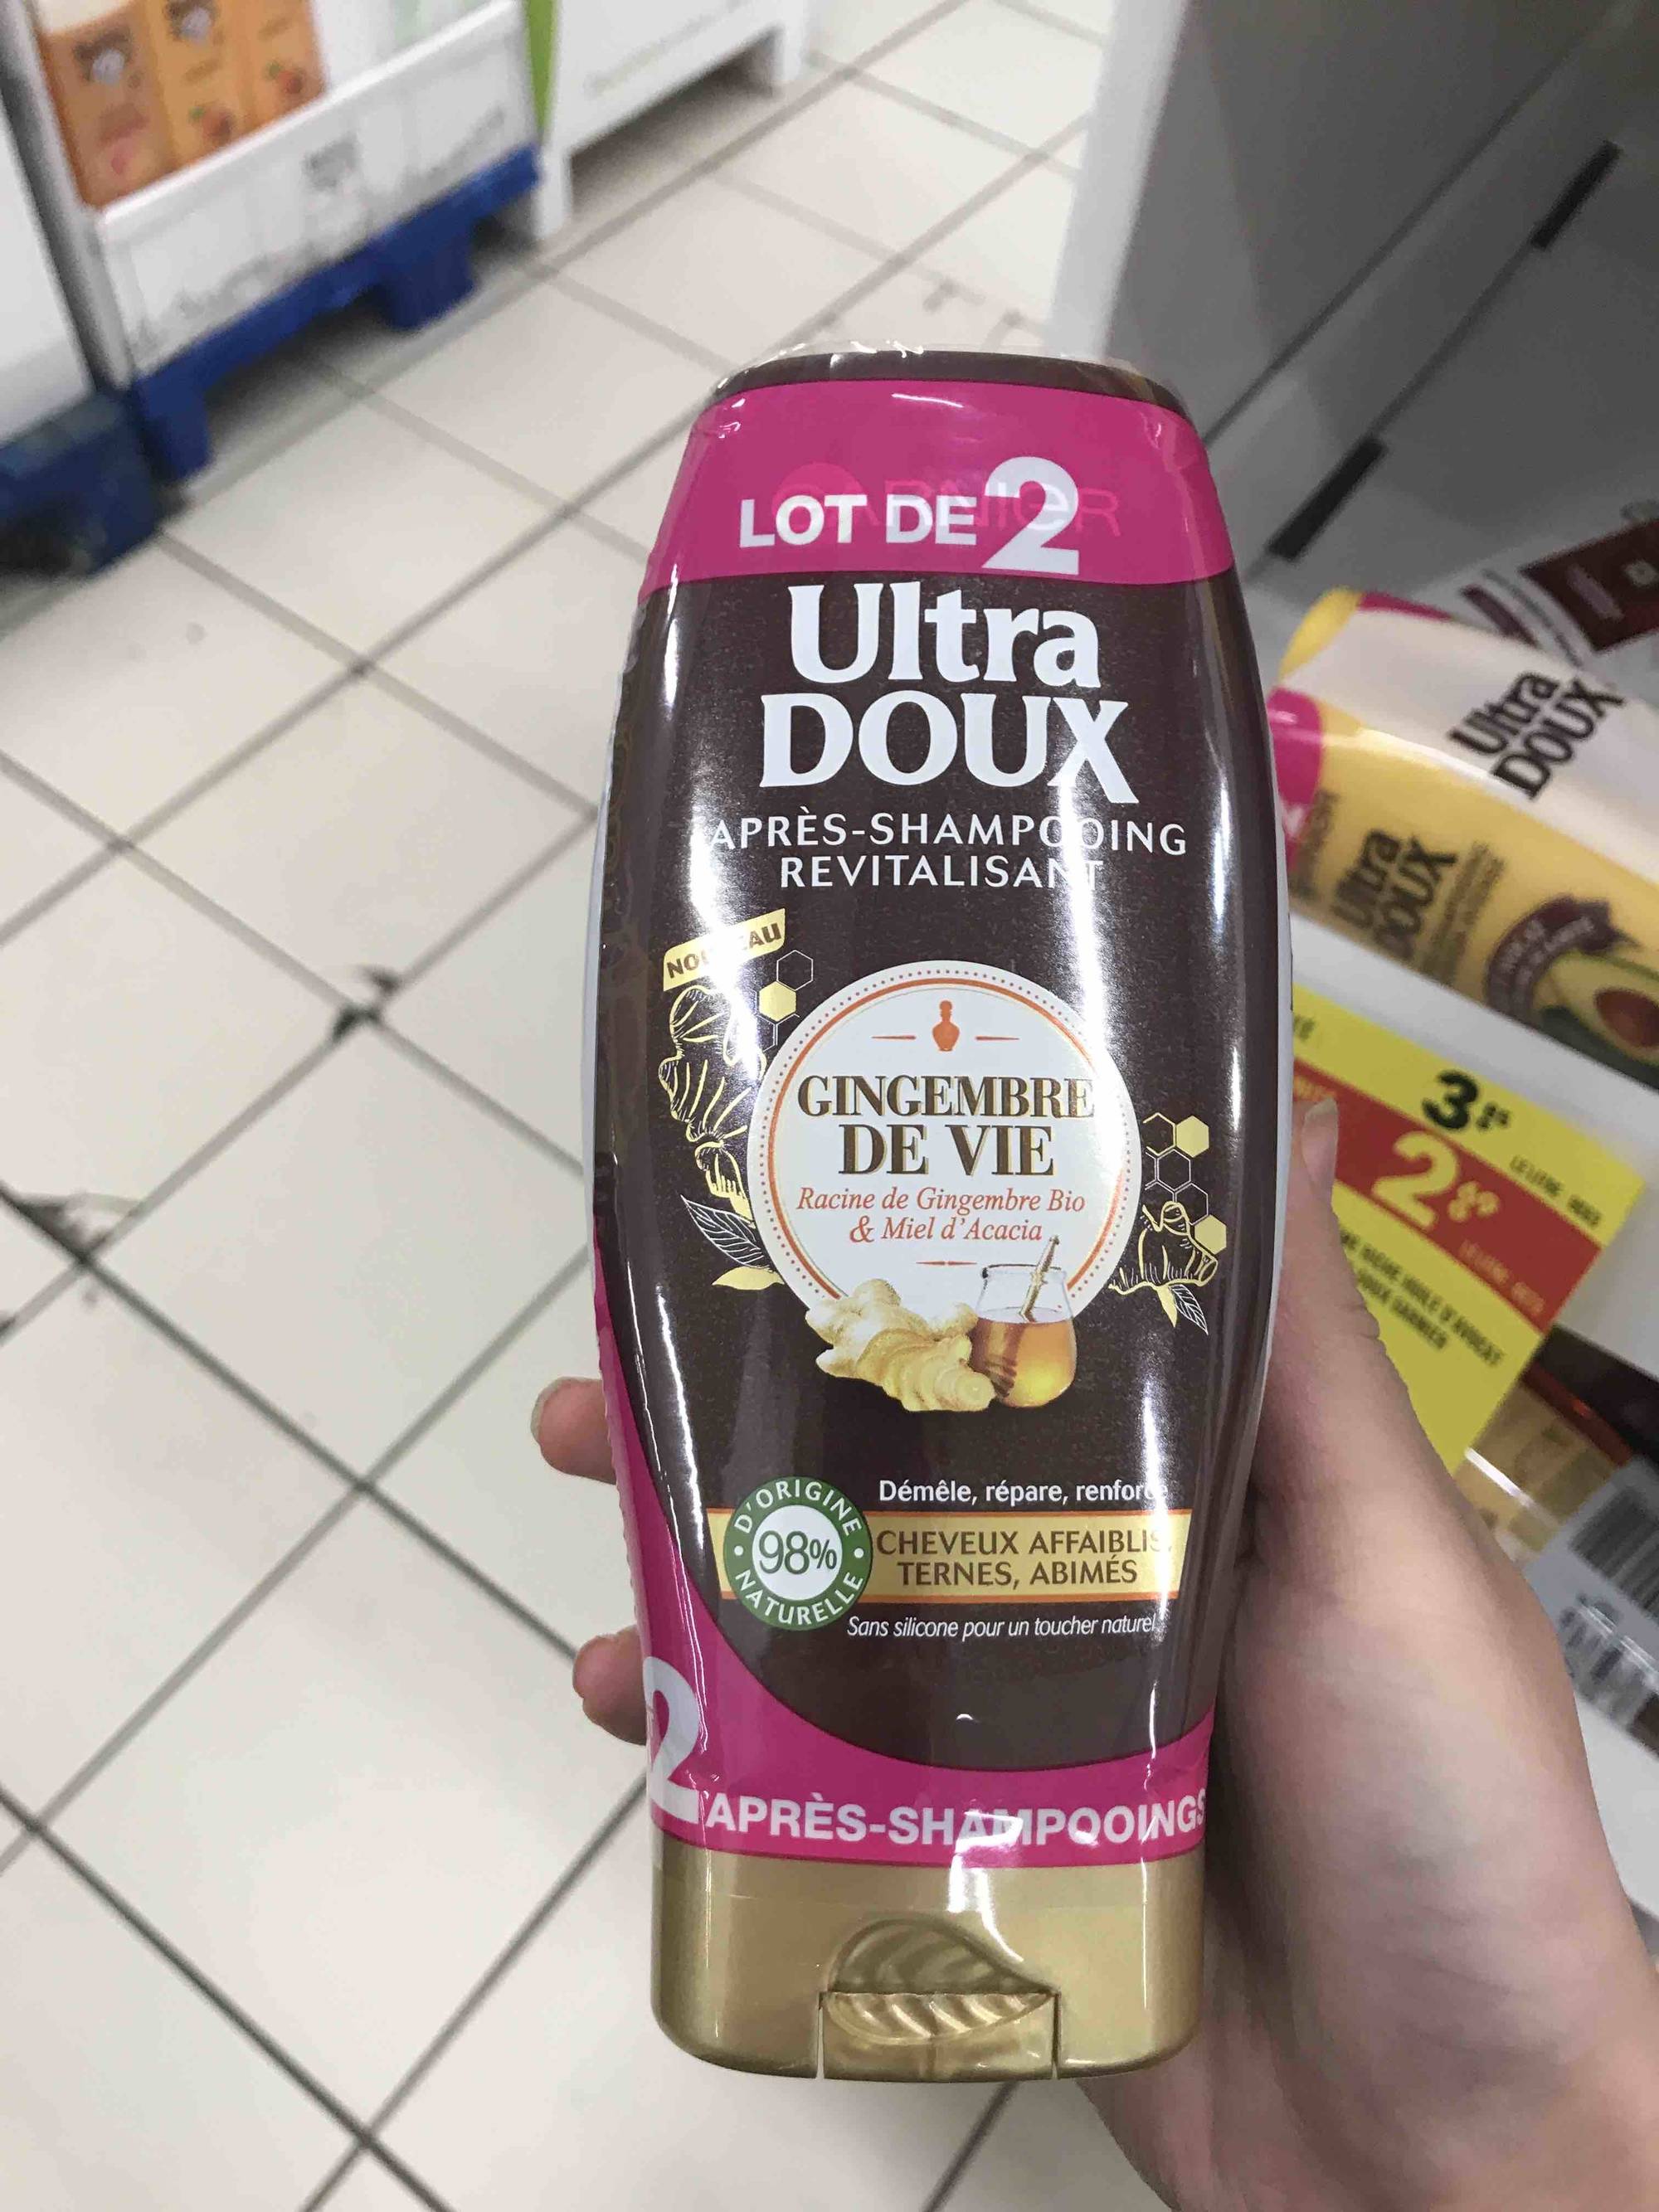 GARNIER - Ultra doux gingembre de vie - Après-shampooing